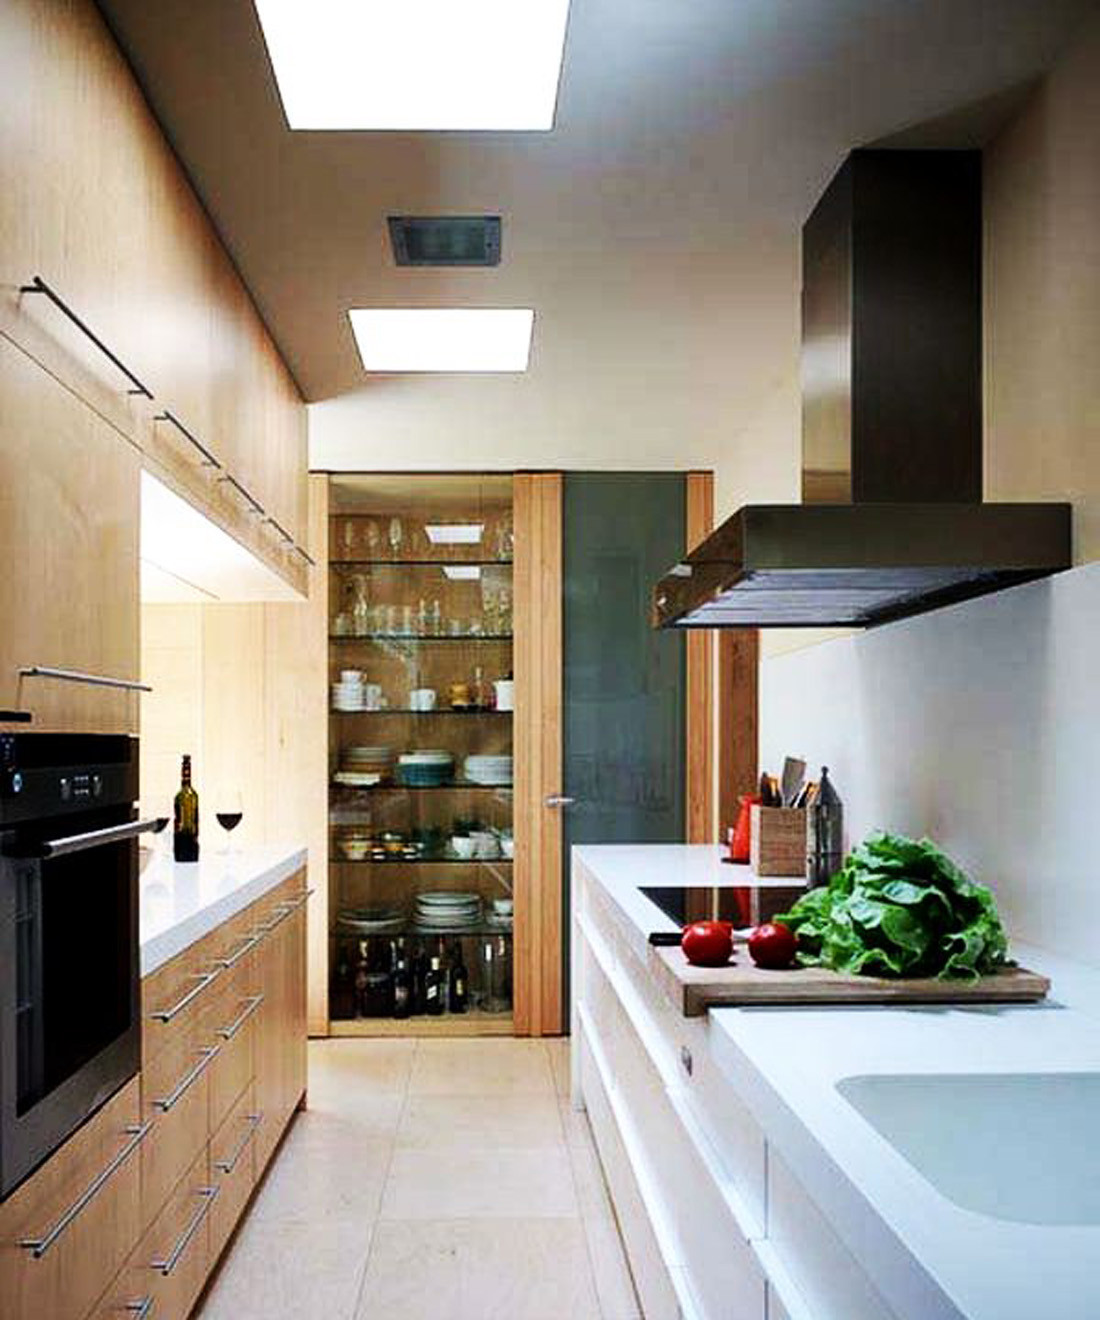 Best ideas about Modern Kitchen Decor Ideas
. Save or Pin 25 Modern Small Kitchen Design Ideas Now.